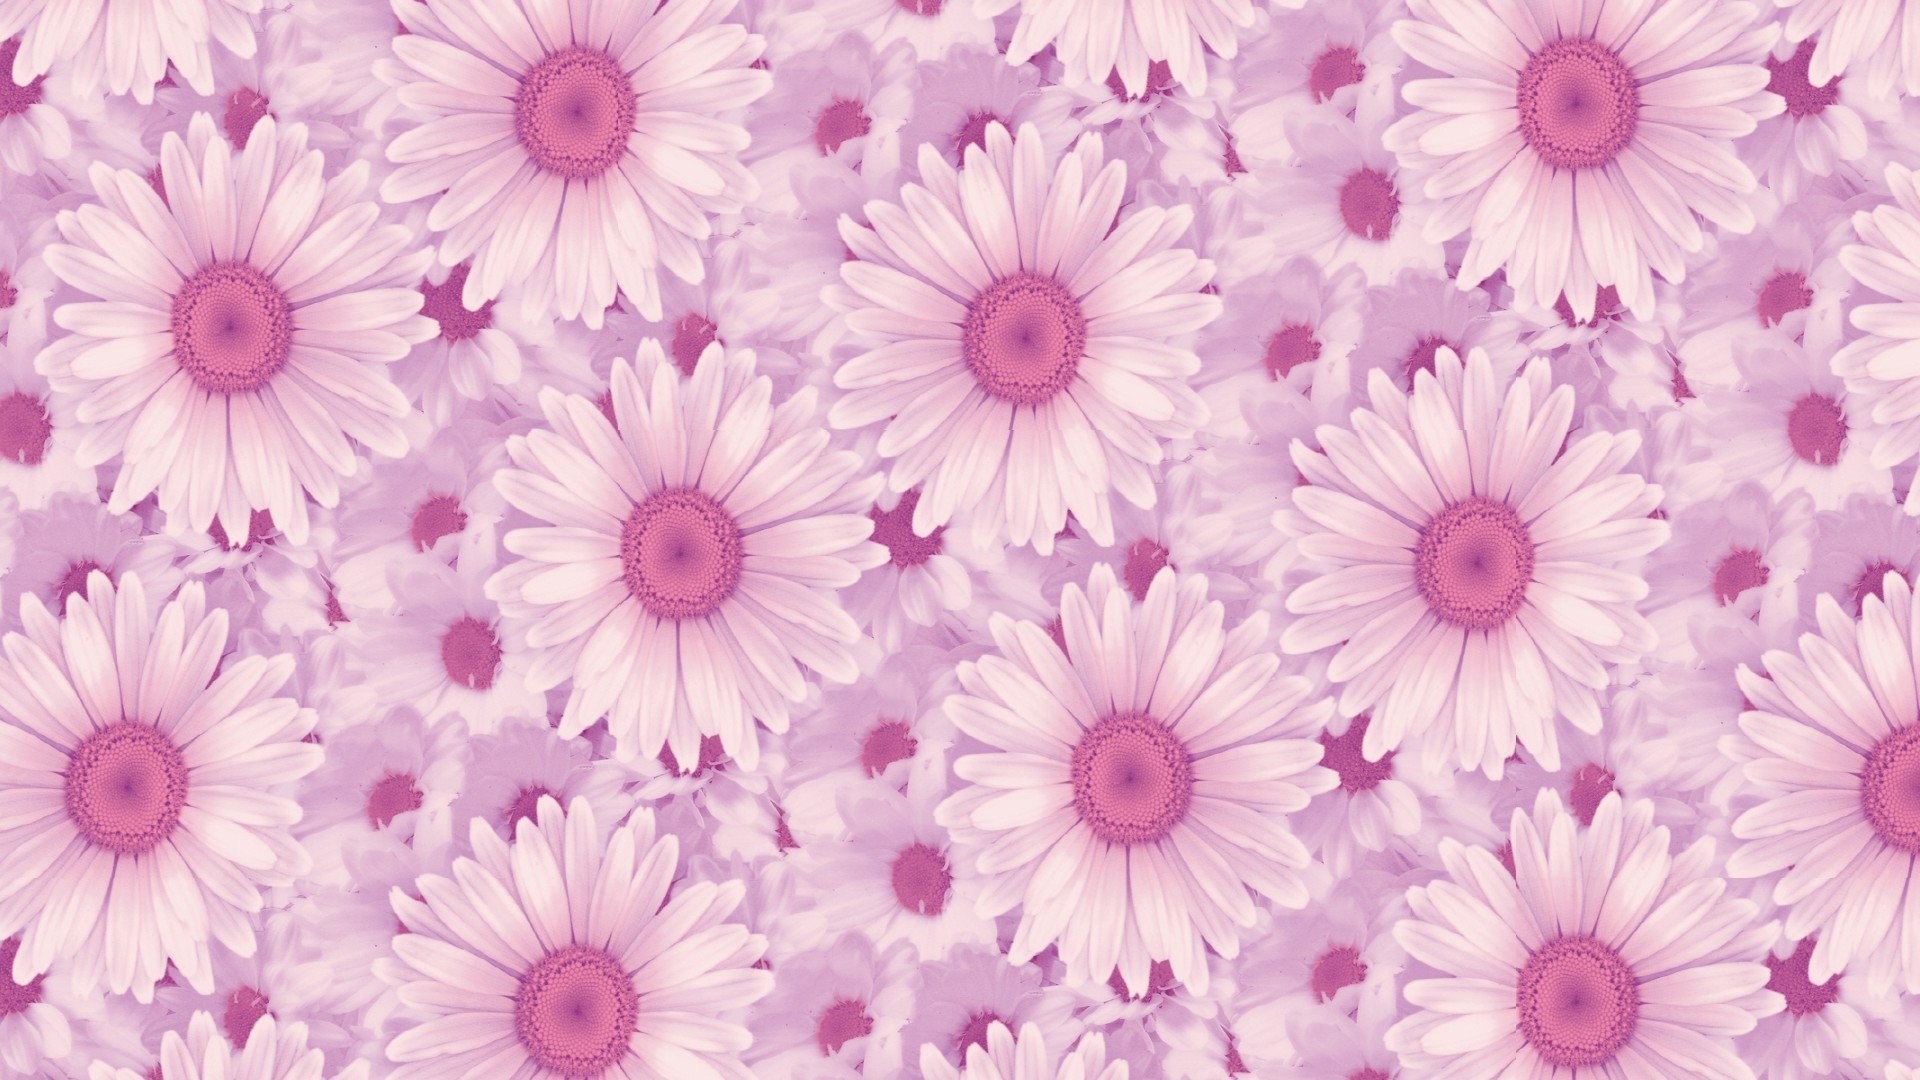 1920x1080 ... Desktop Wallpapers Â» Flowers Backgrounds Â» Gerbera Daisy Pink .